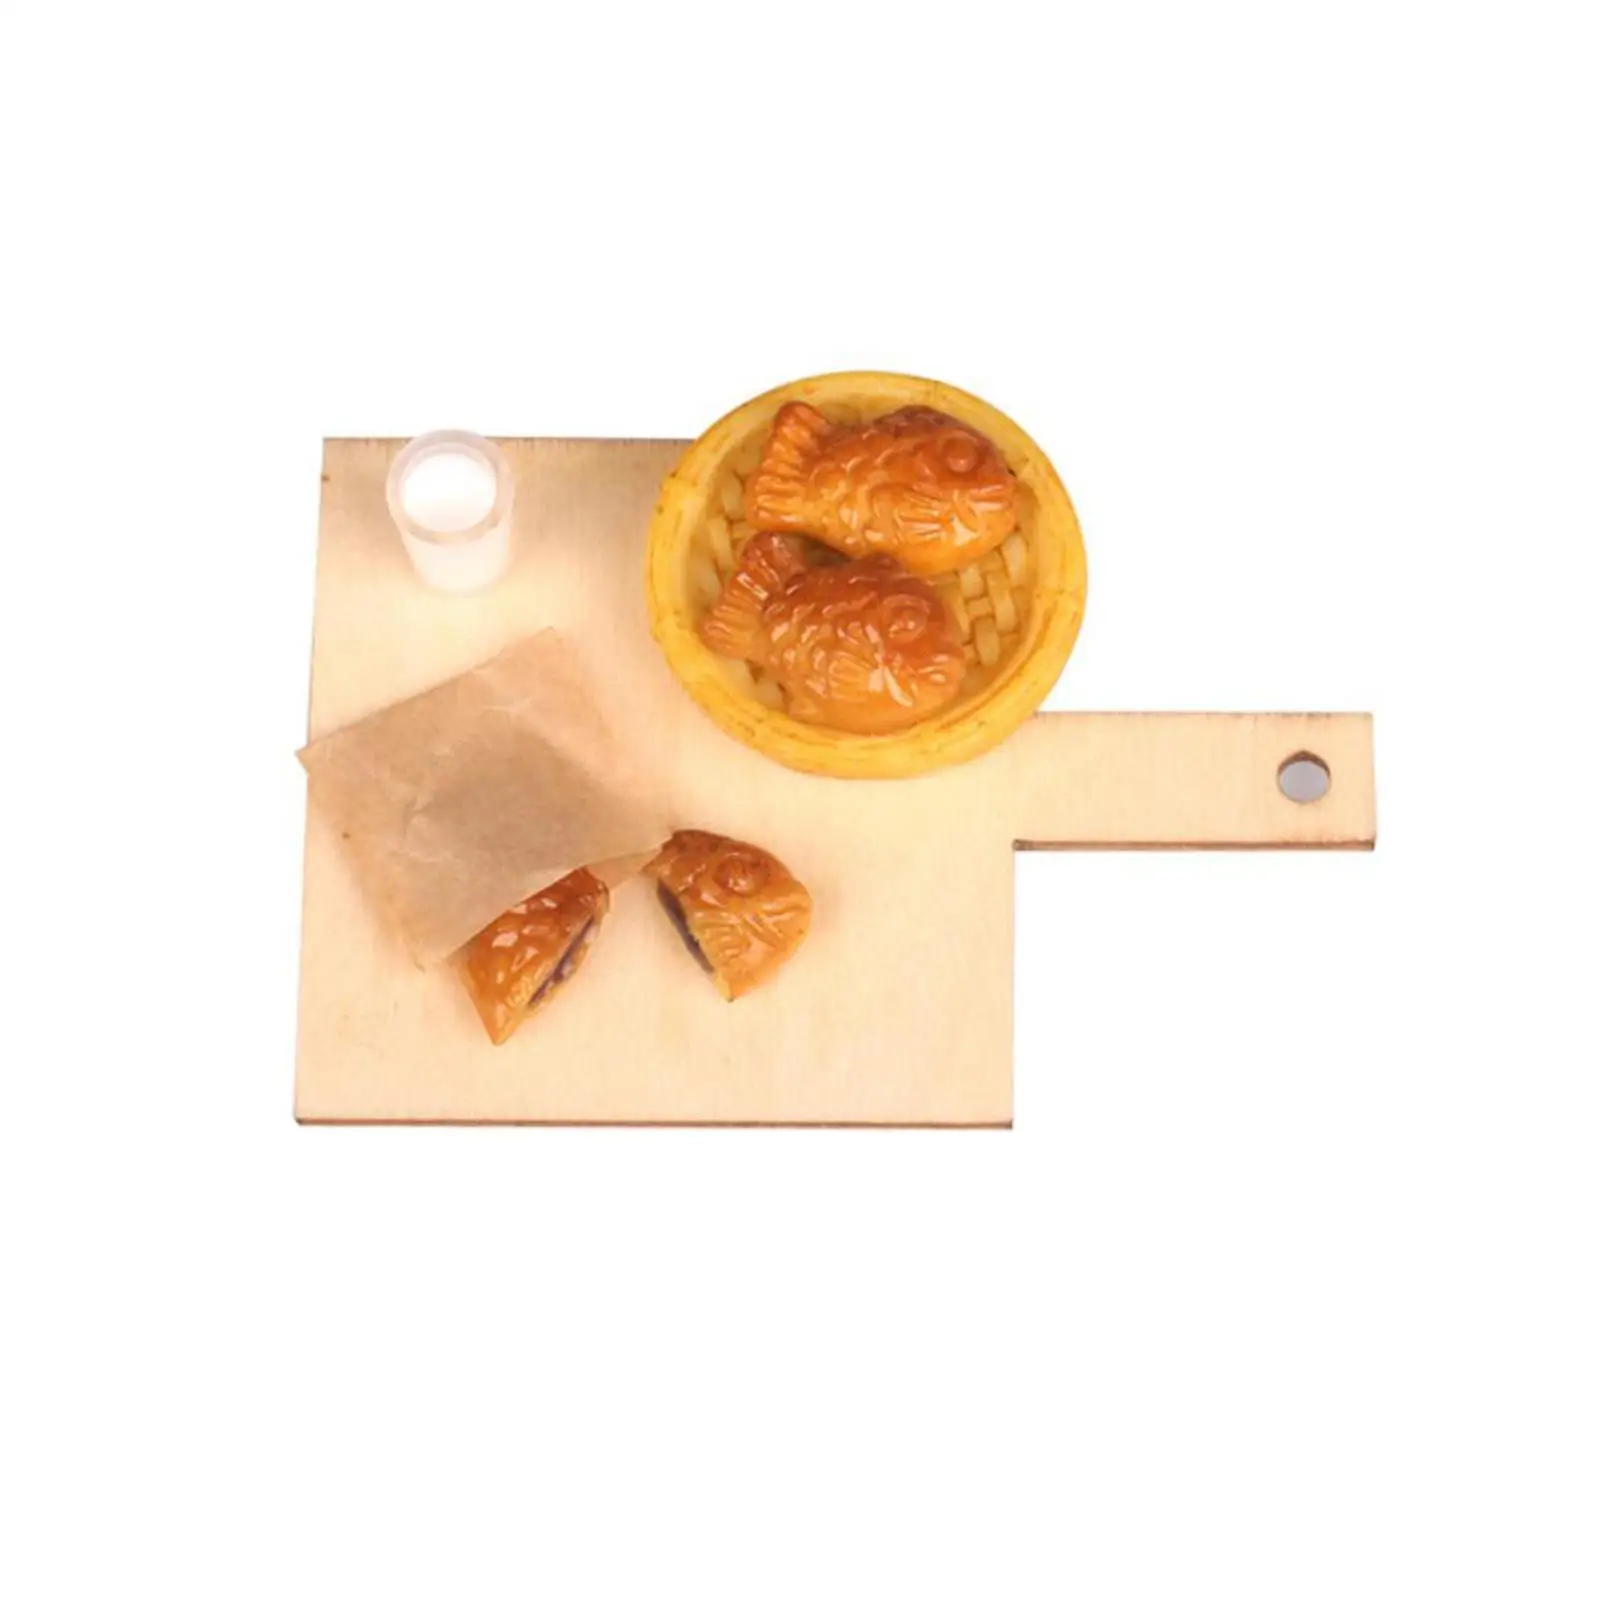 1/12 Miniature Foods Waffle Simulation 1:12 Miniature Fish Shaped Pancake for Living Room Kitchen Desktop Dining Room Restaurant